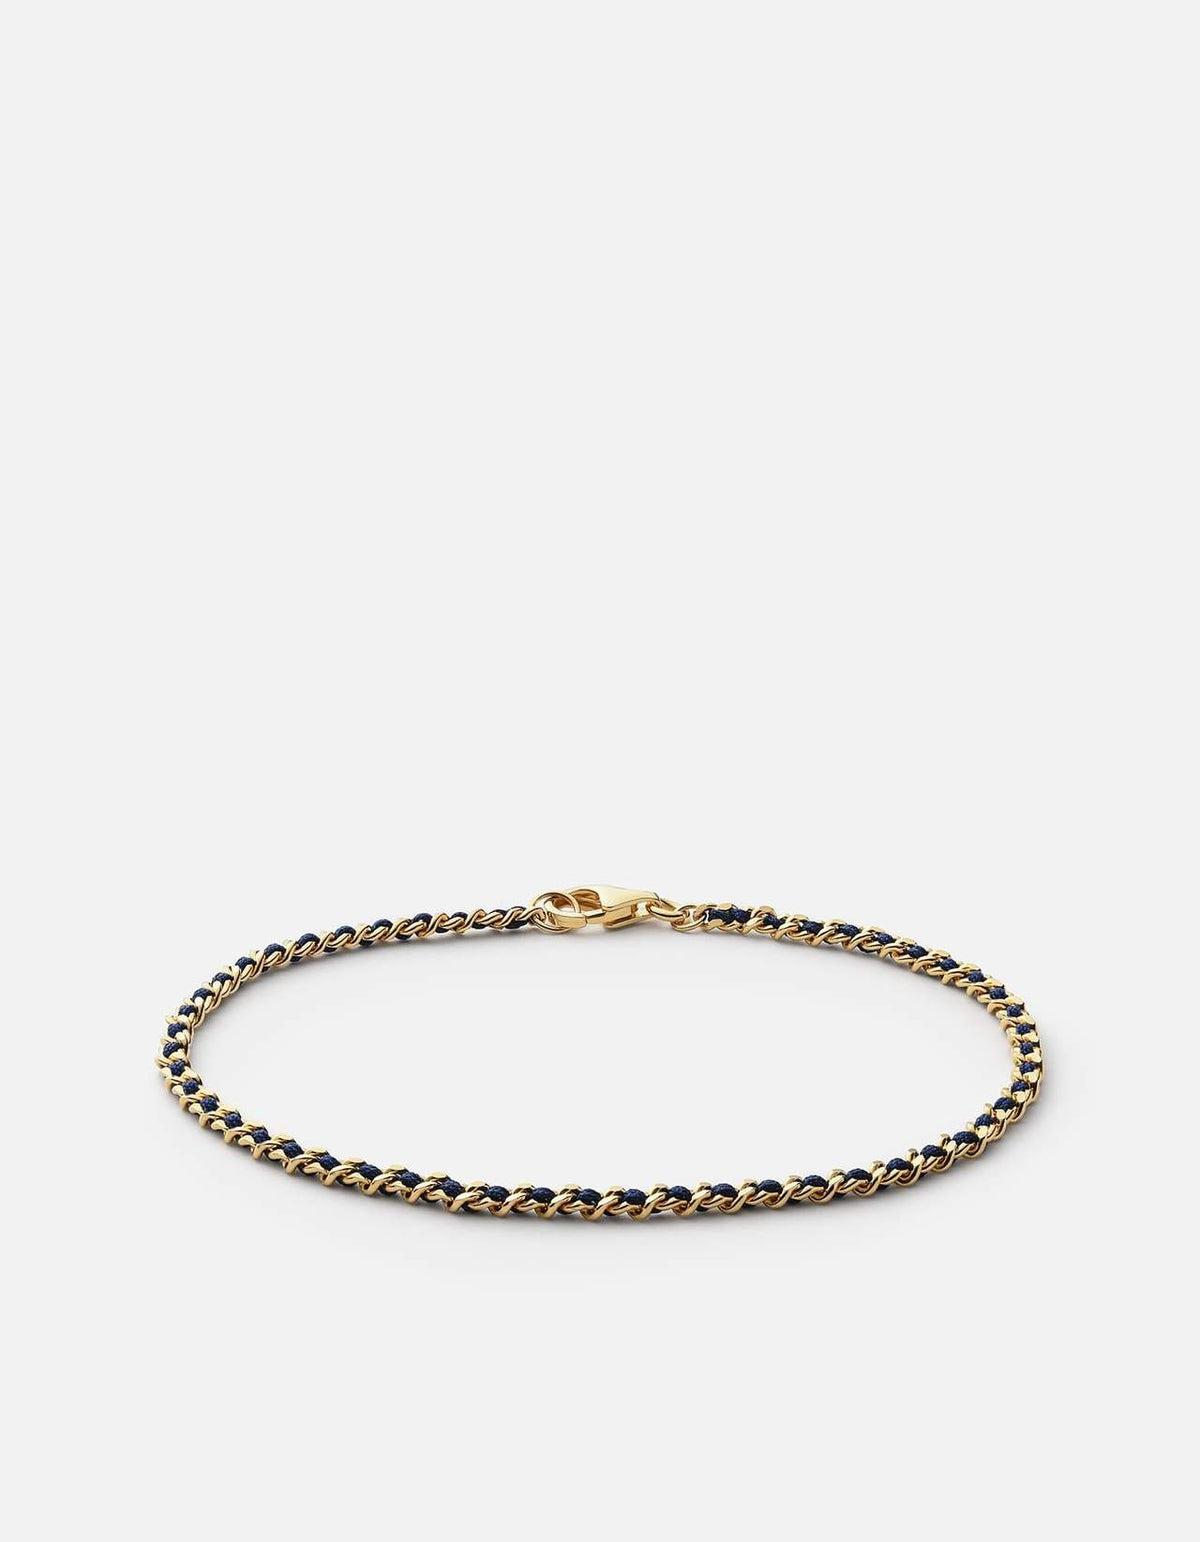 Miansai 2mm Braided Chain Bracelet, Gold Vermeil